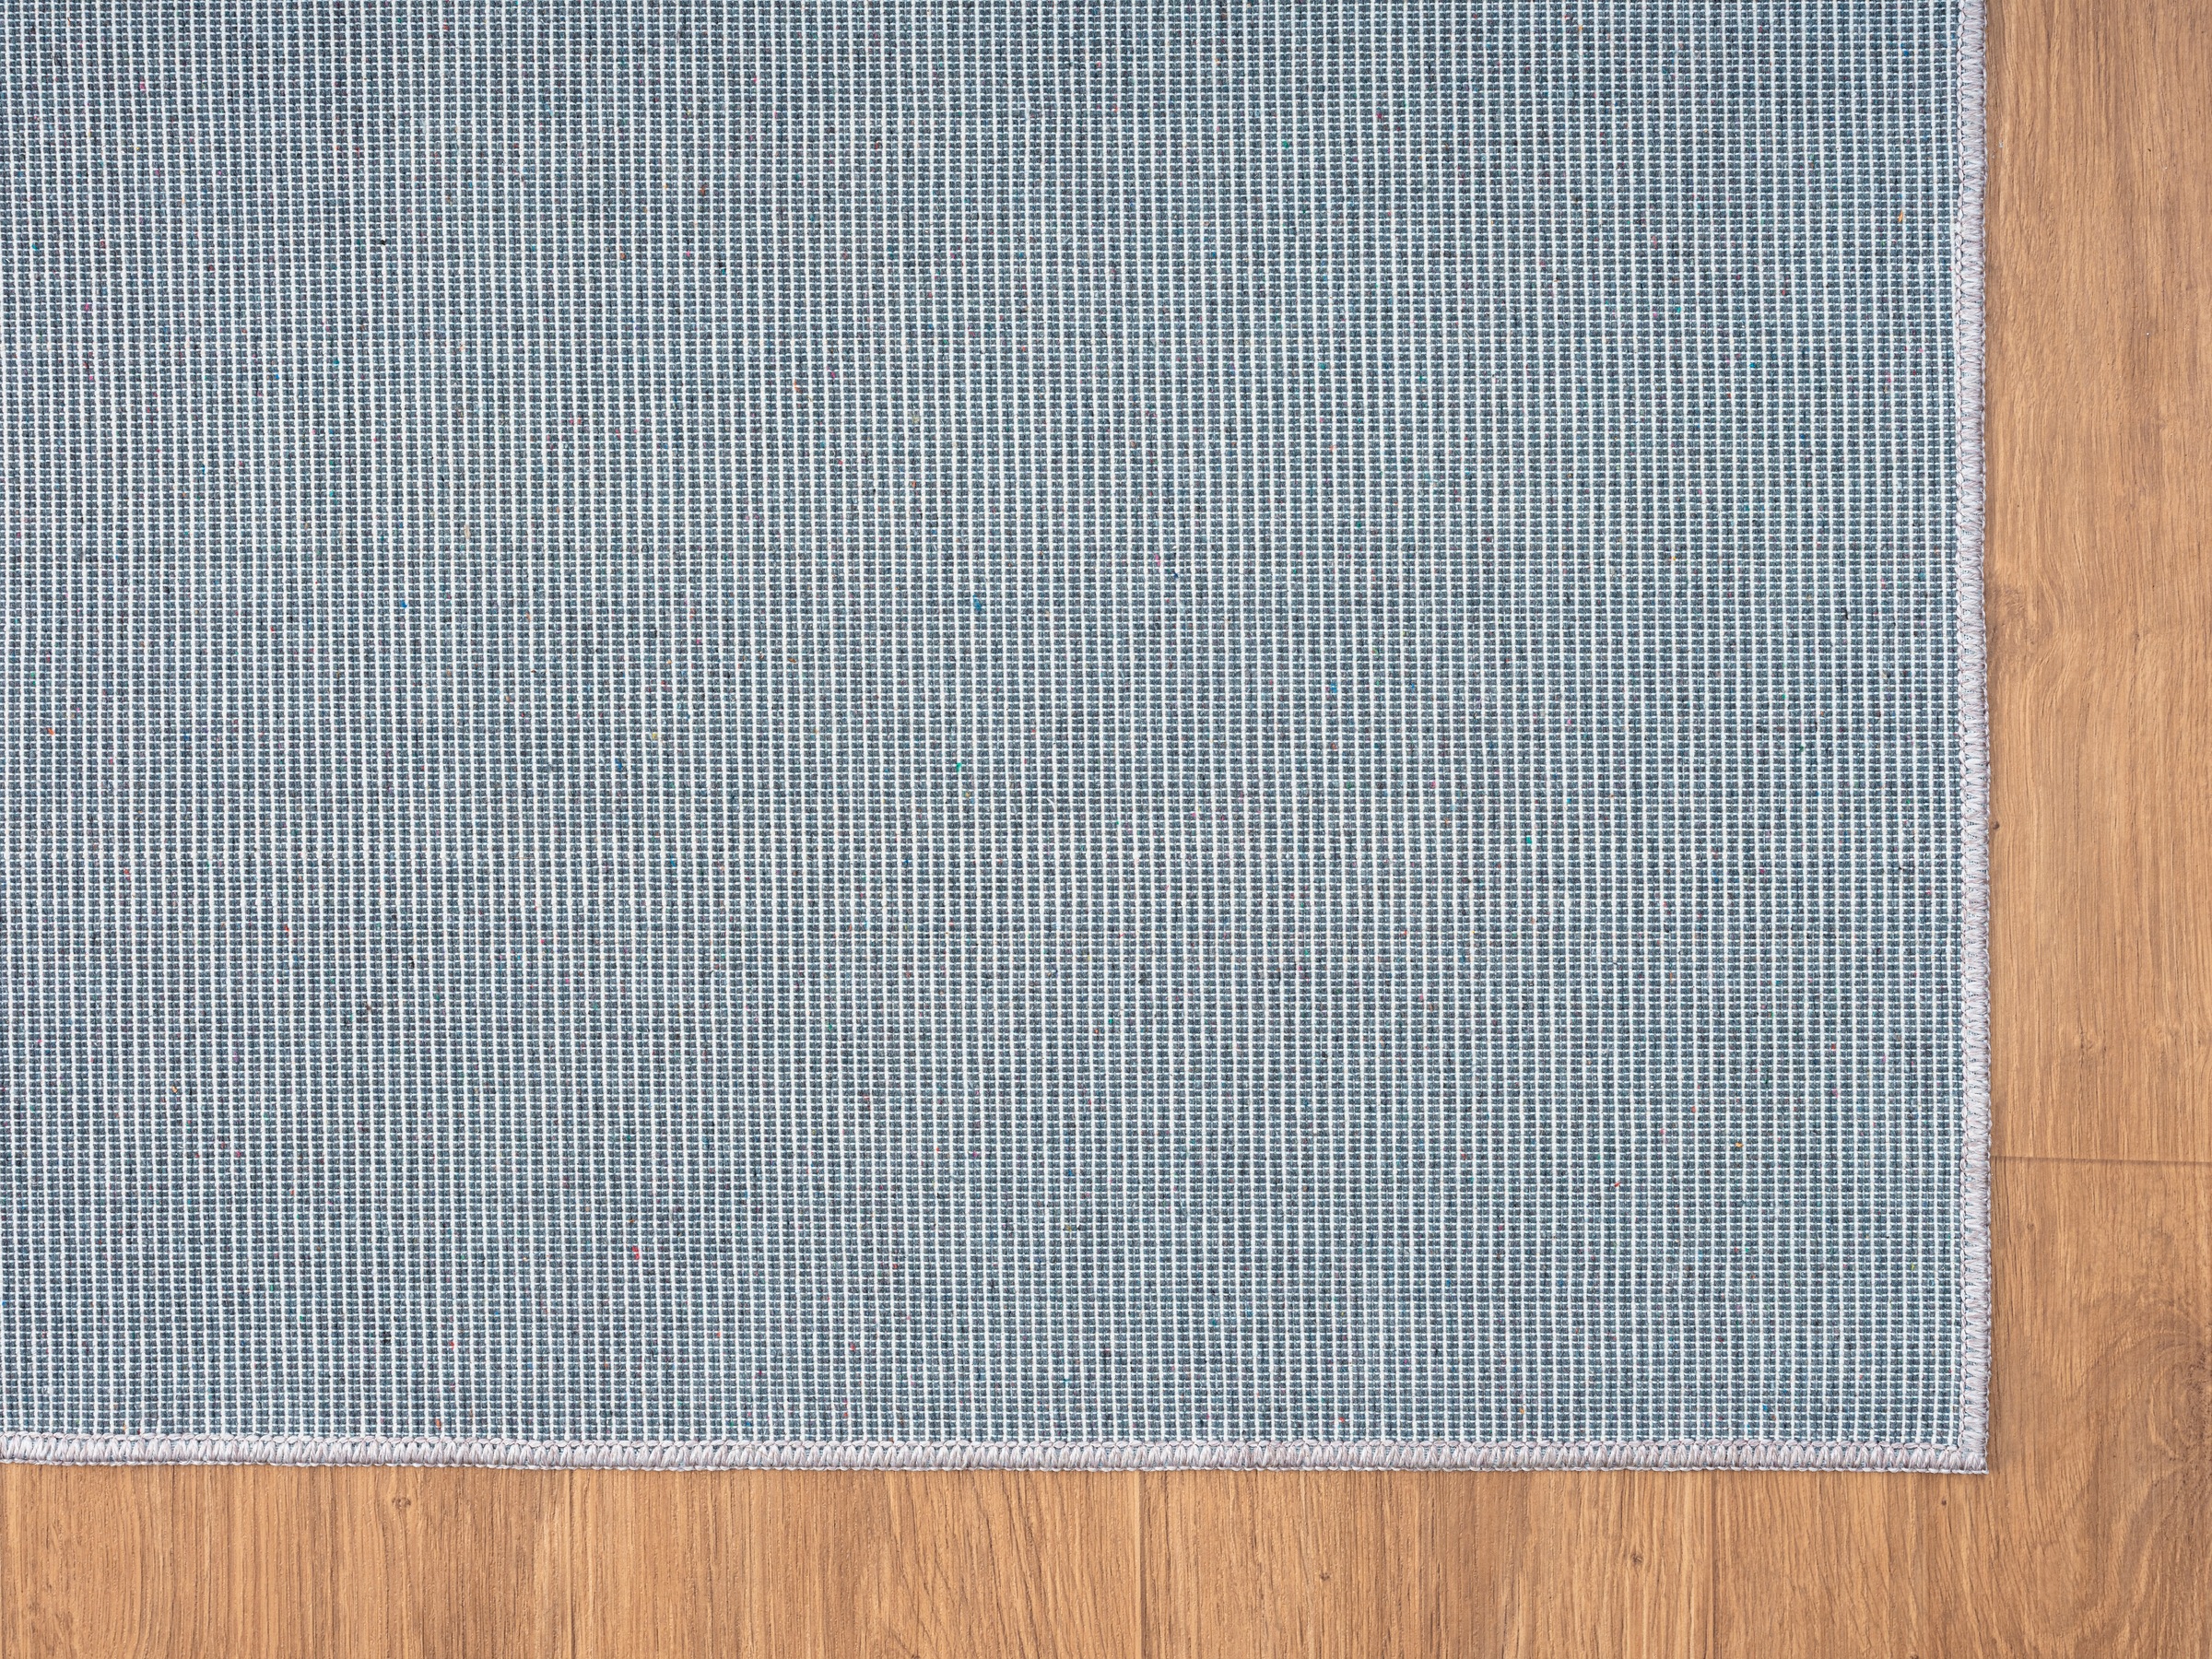 Myflair Möbel & Accessoires Teppich »Diana«, rechteckig, bedruckt, modernes Design, In- & Outdoor geeignet, waschbar